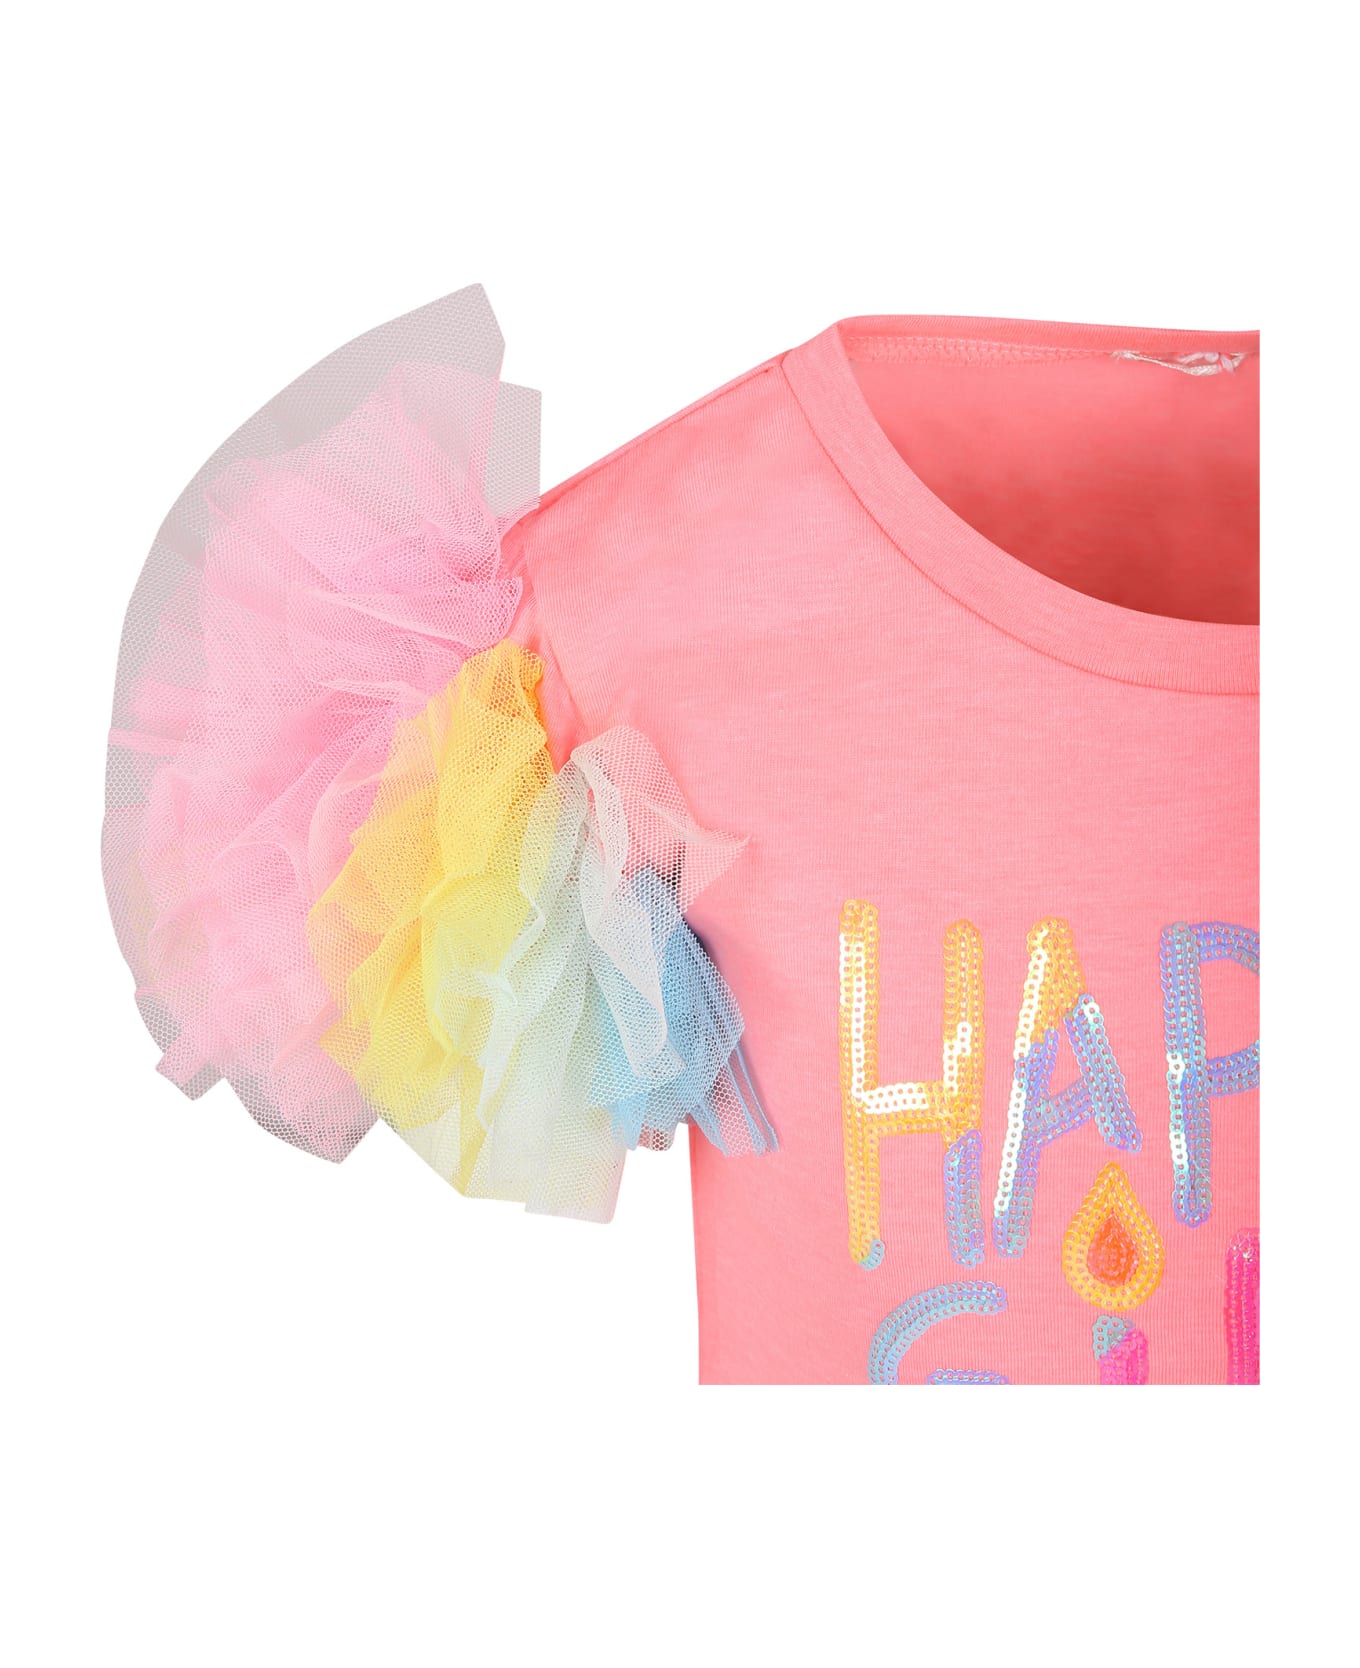 Billieblush Fuchsia T-shirt For Girl With Tulle And Multicolor Print - Fuchsia